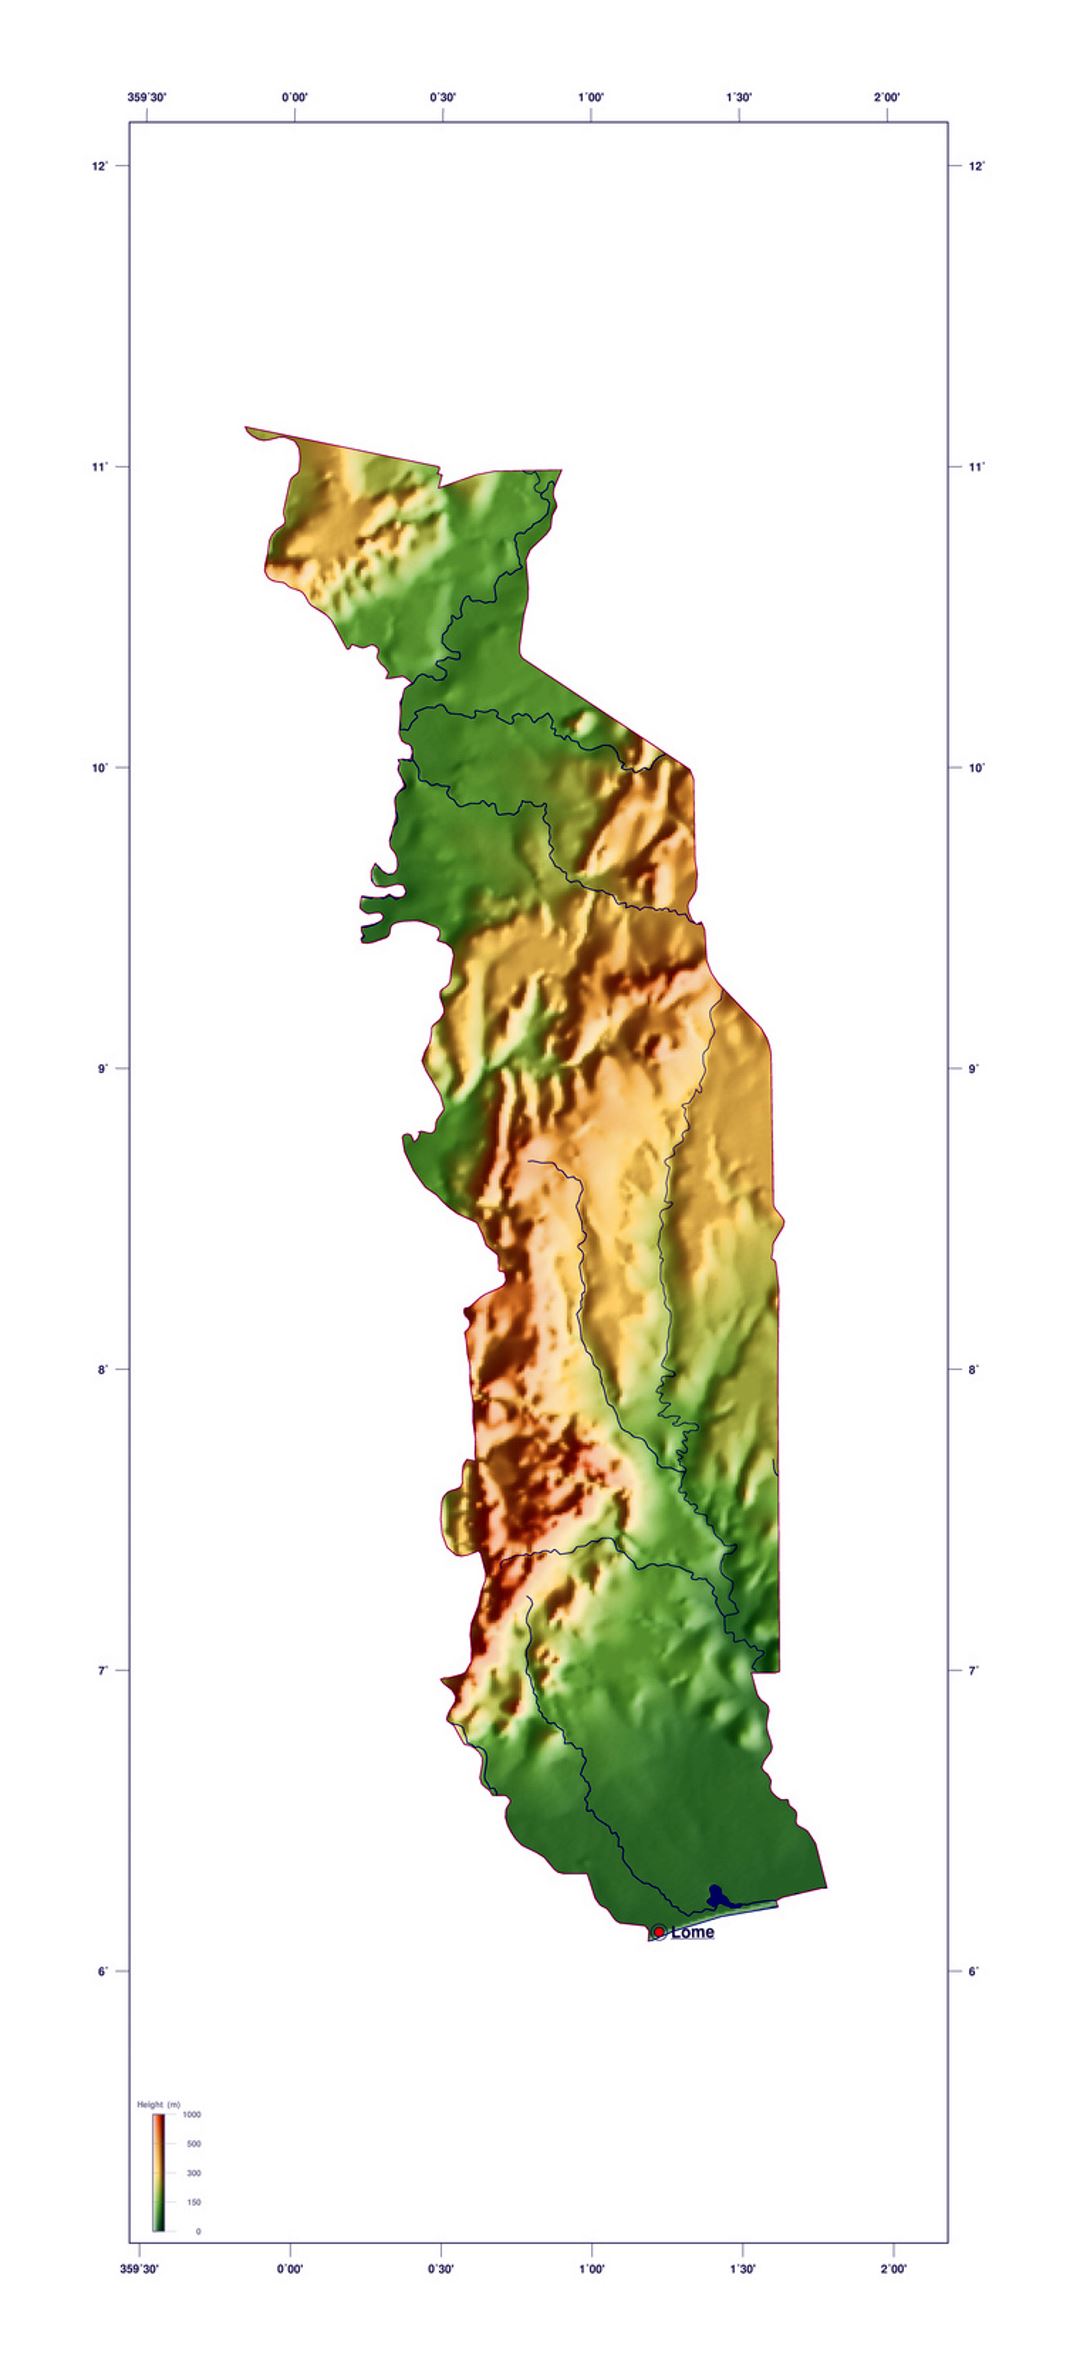 Large elevation map of Togo